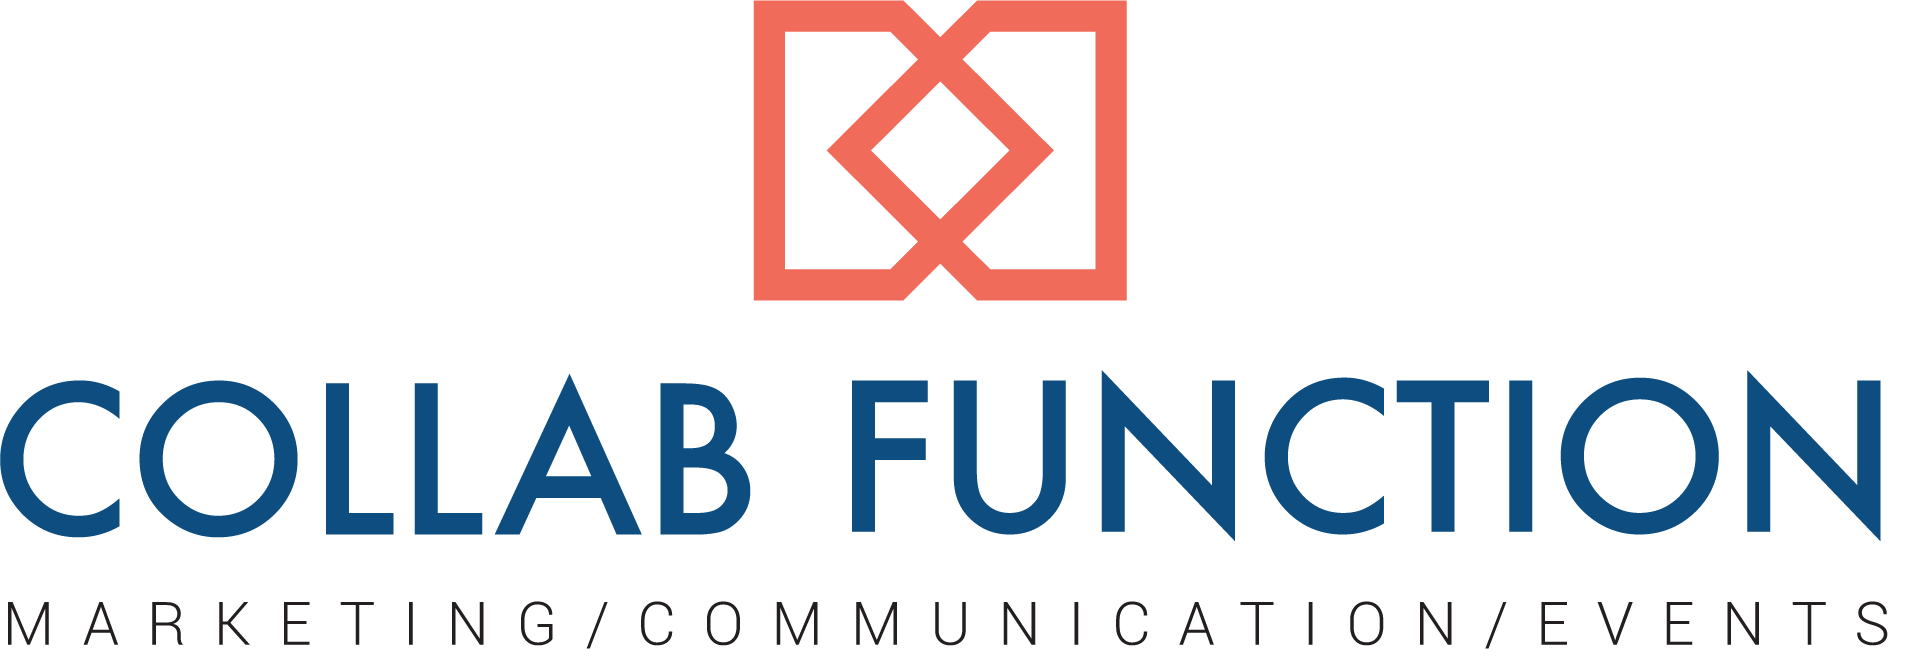 Collab Function Logo